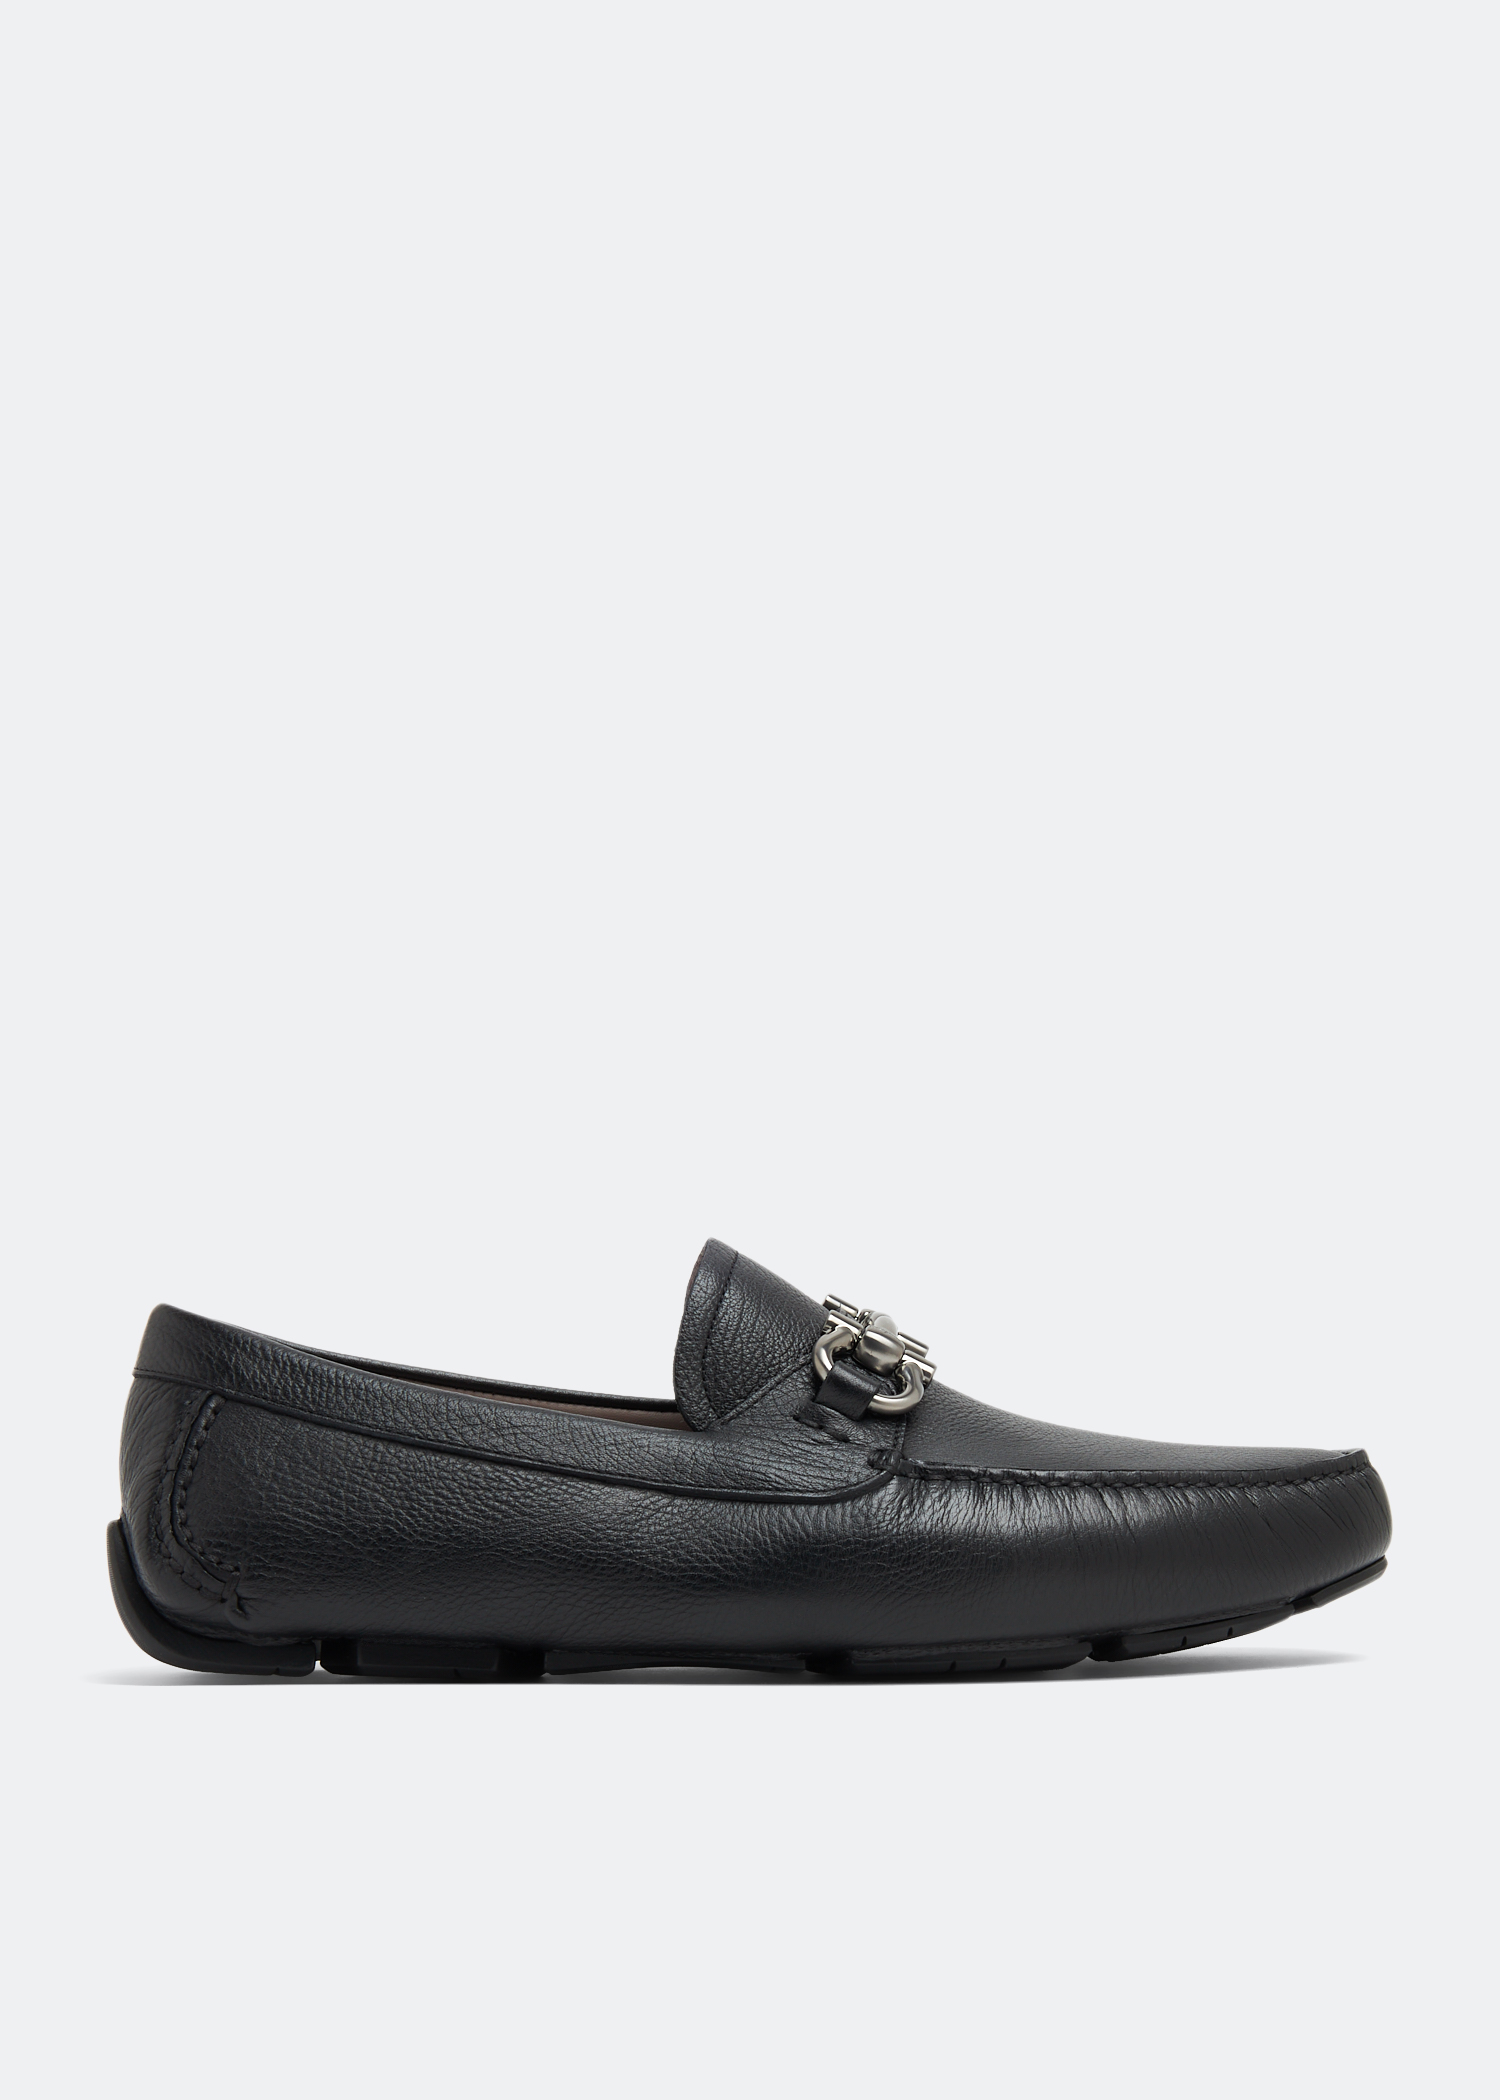 Ferragamo Gancini loafers for Men - Black in UAE